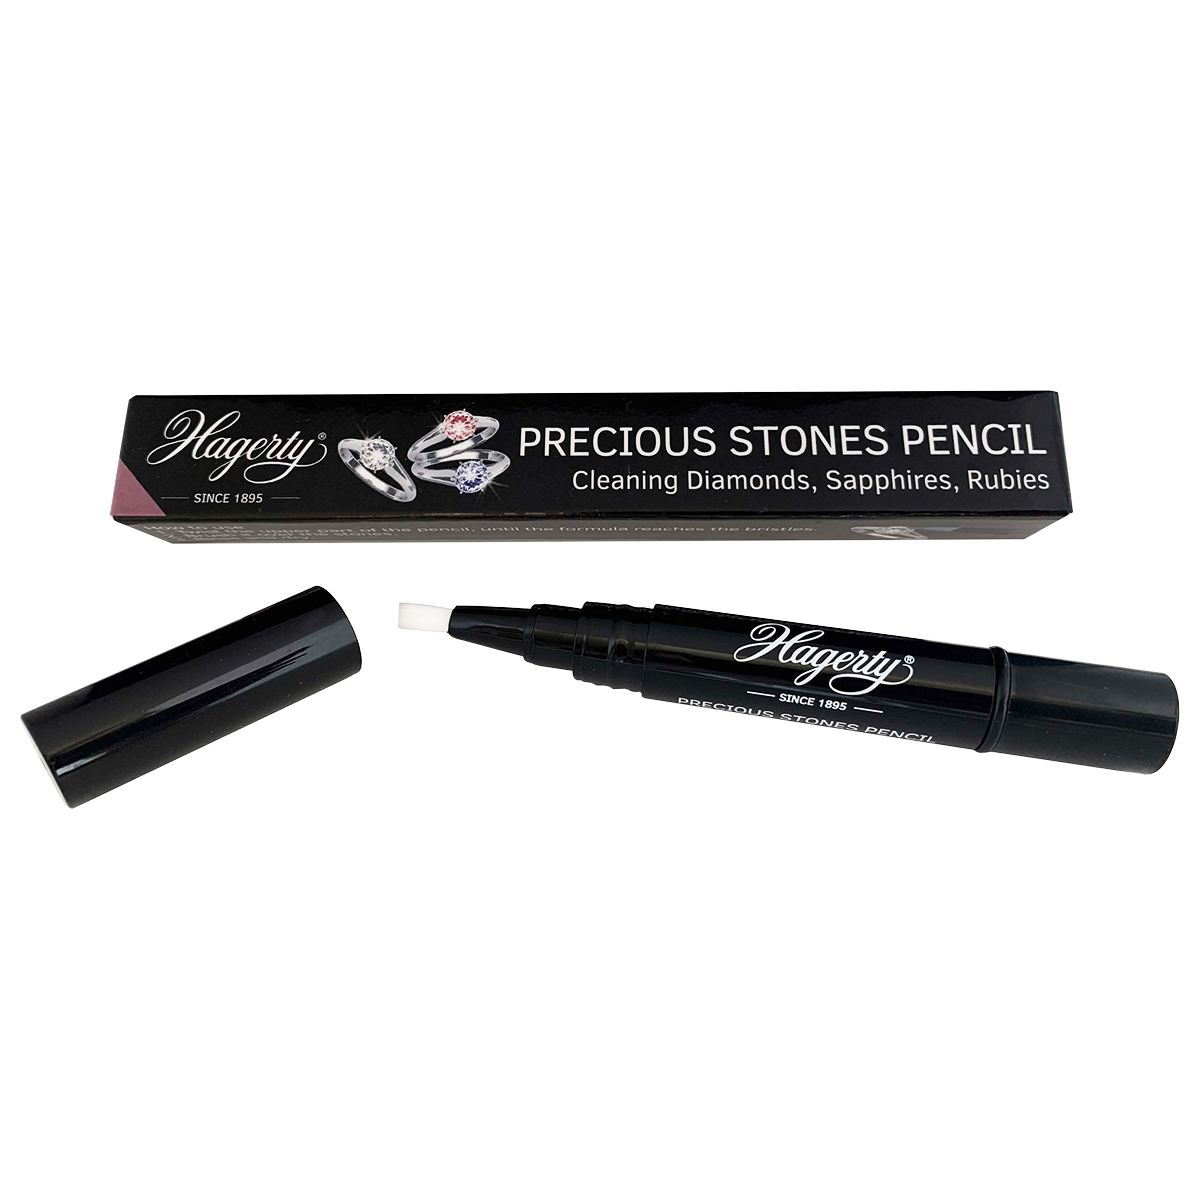 Hagerty Precious Stones Pencil, verzorgingspotlood voor juwelen